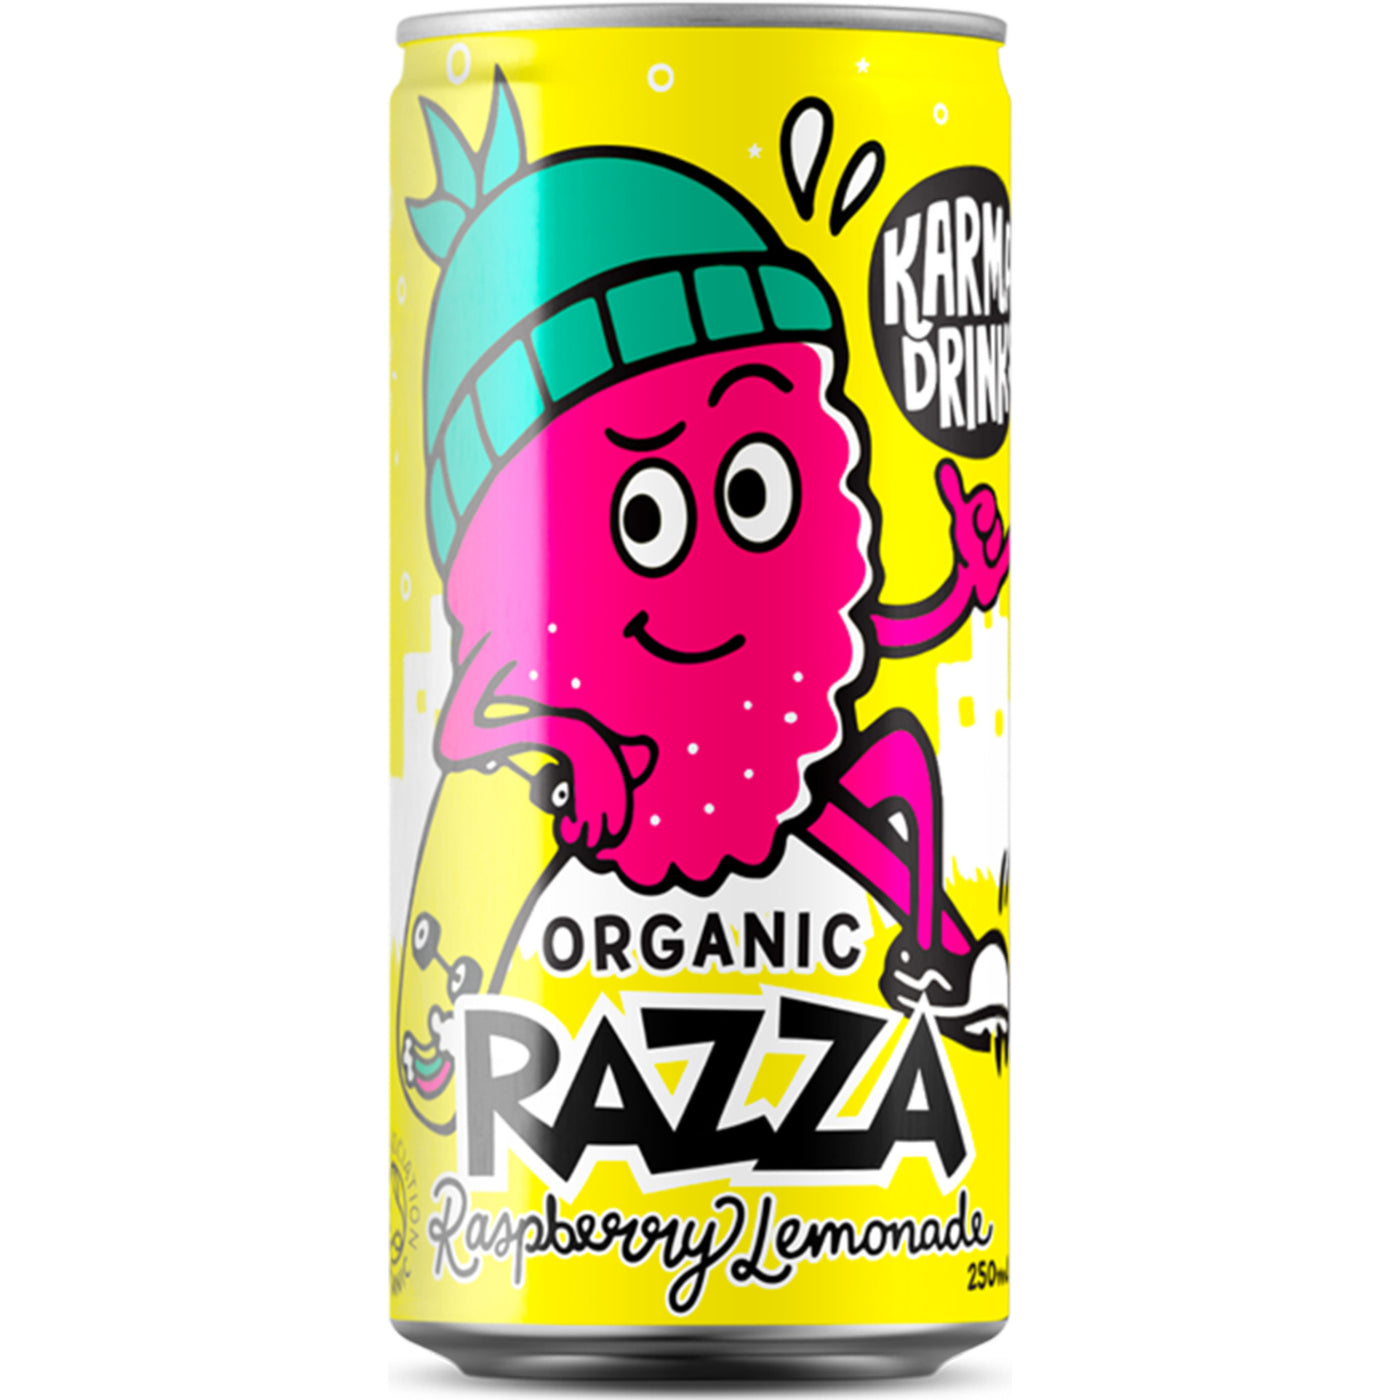 Karma Raspberry Lemonade